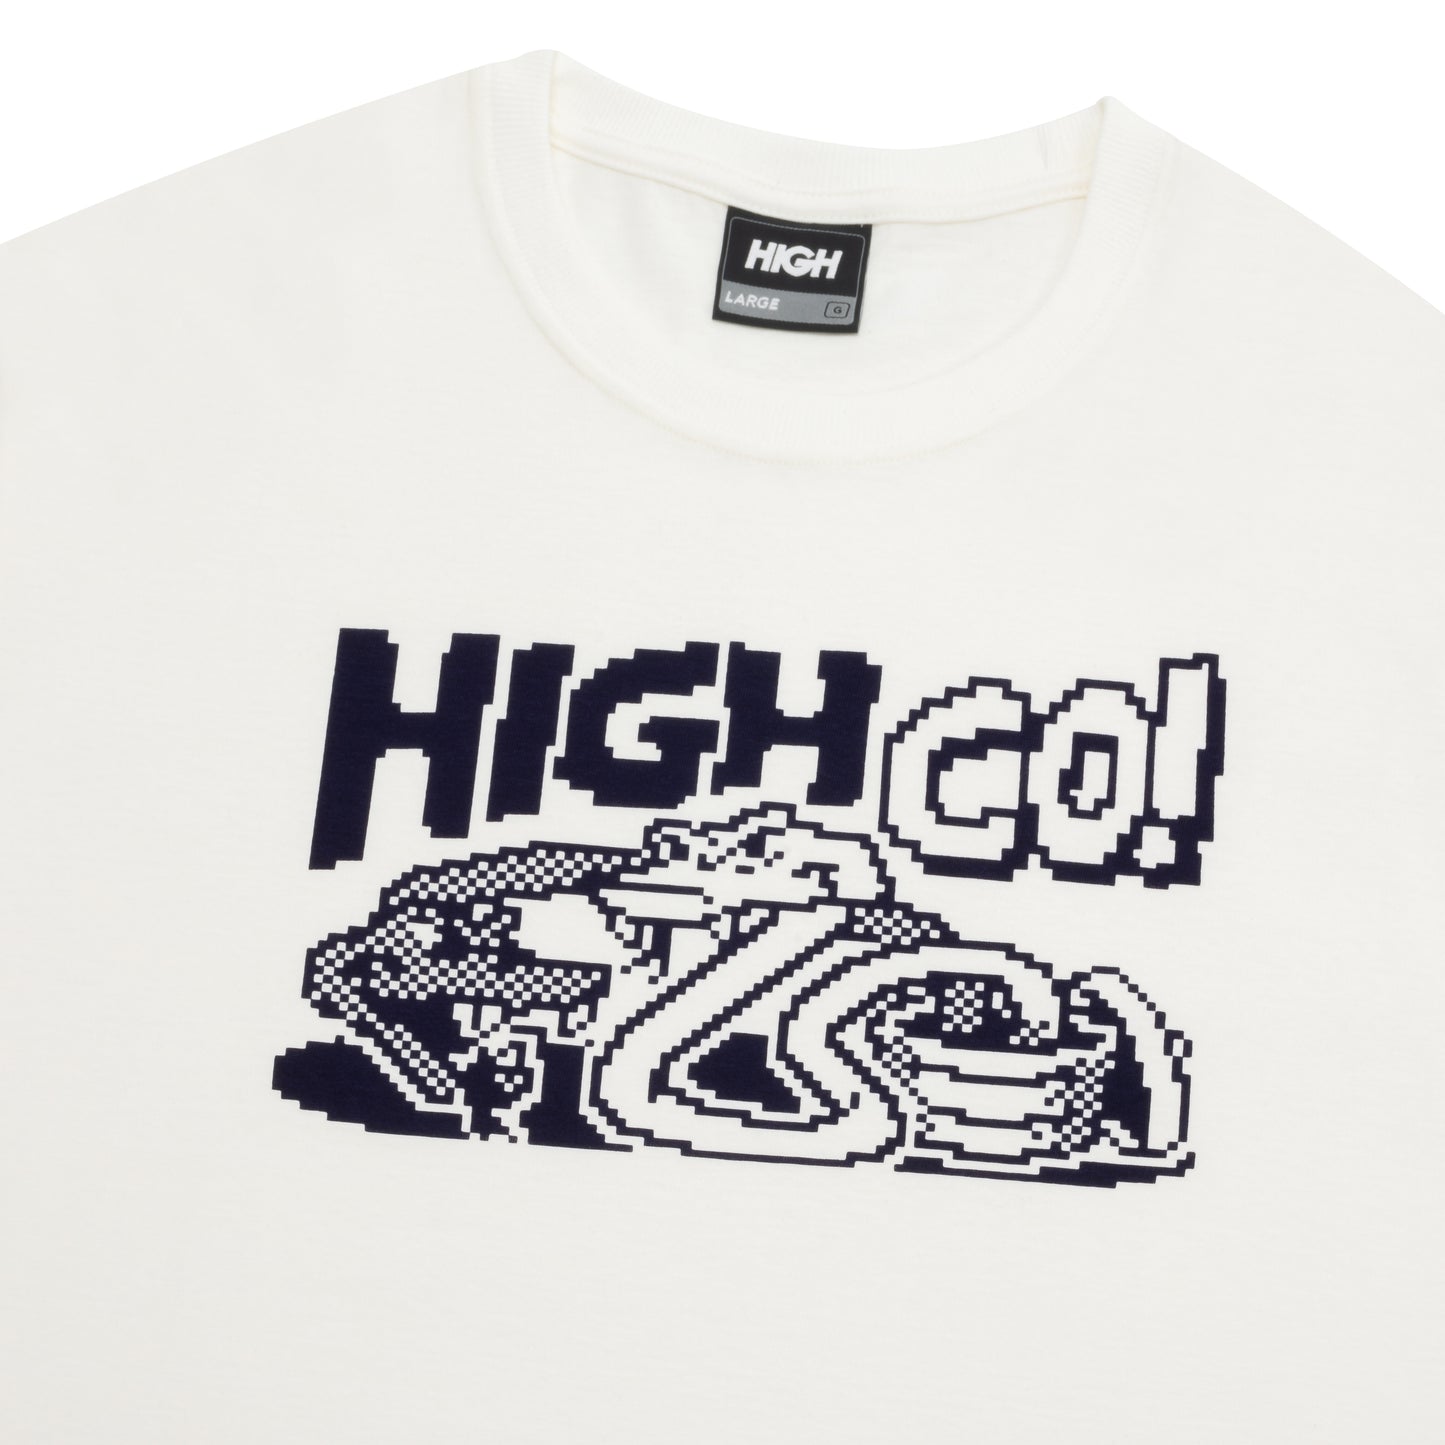 HIGH - Camiseta Cellphone "White" - THE GAME